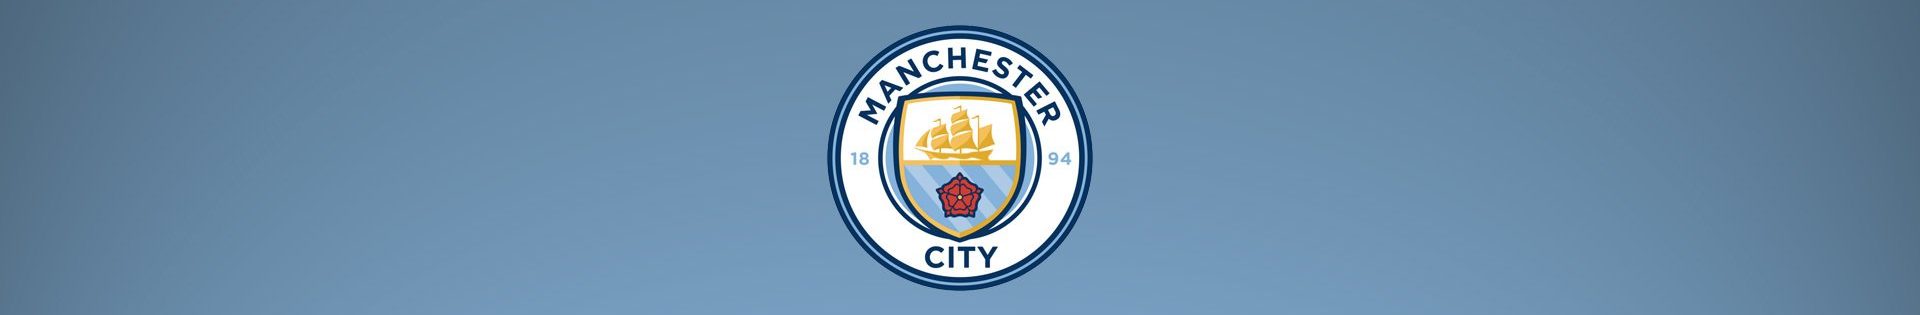 Perfect Tours Fussballreisen Manchester City (5)